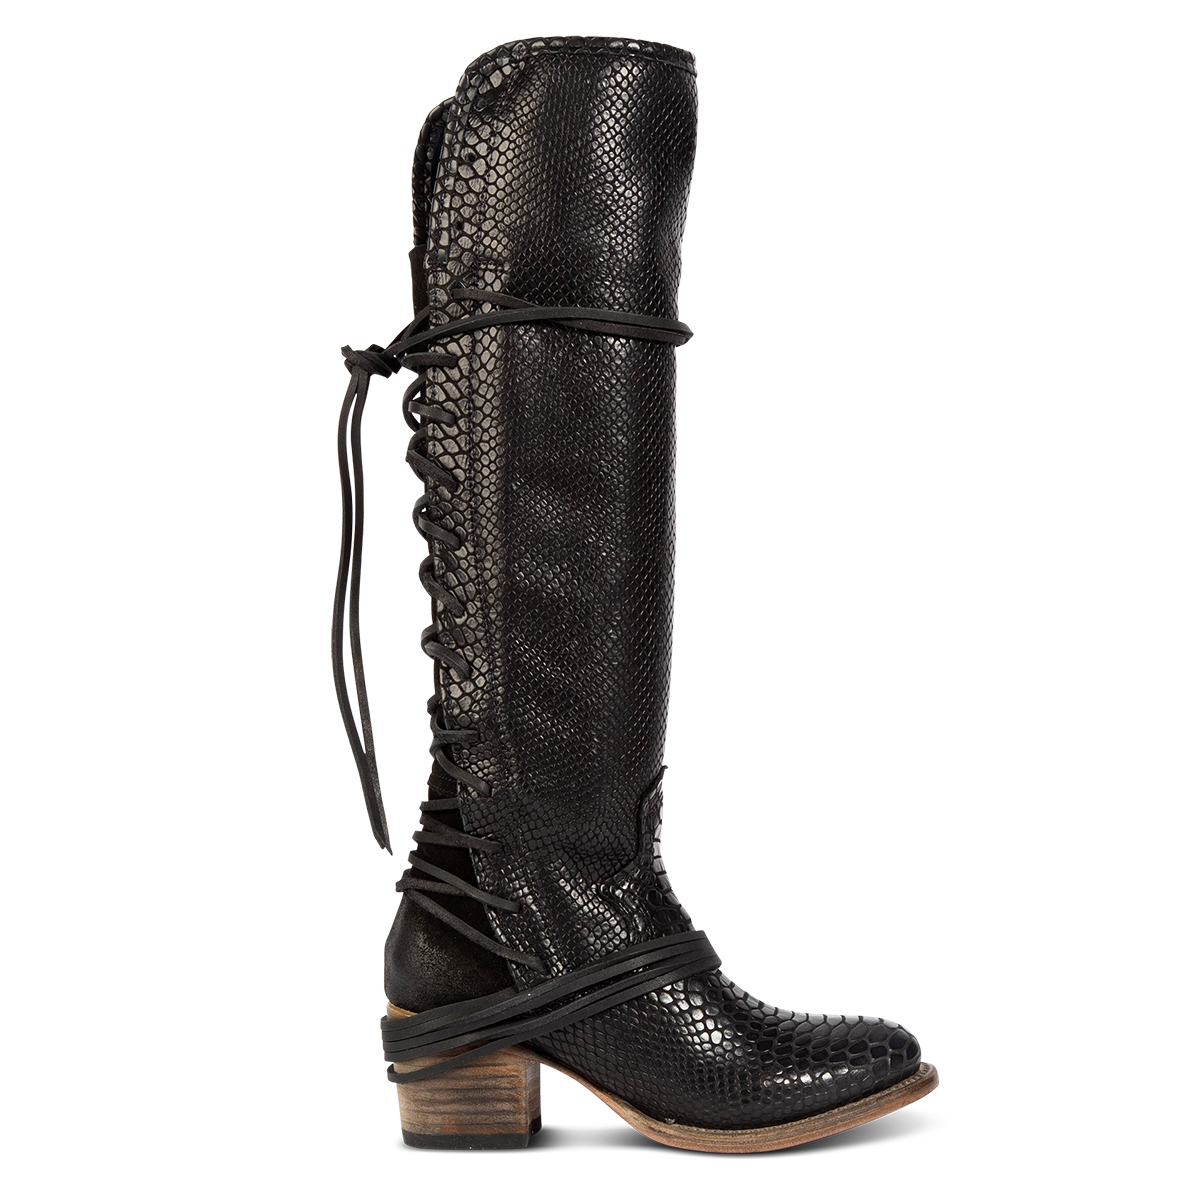 FREEBIRD women’s Coal black snake leather knee high adjustable back lacing boot